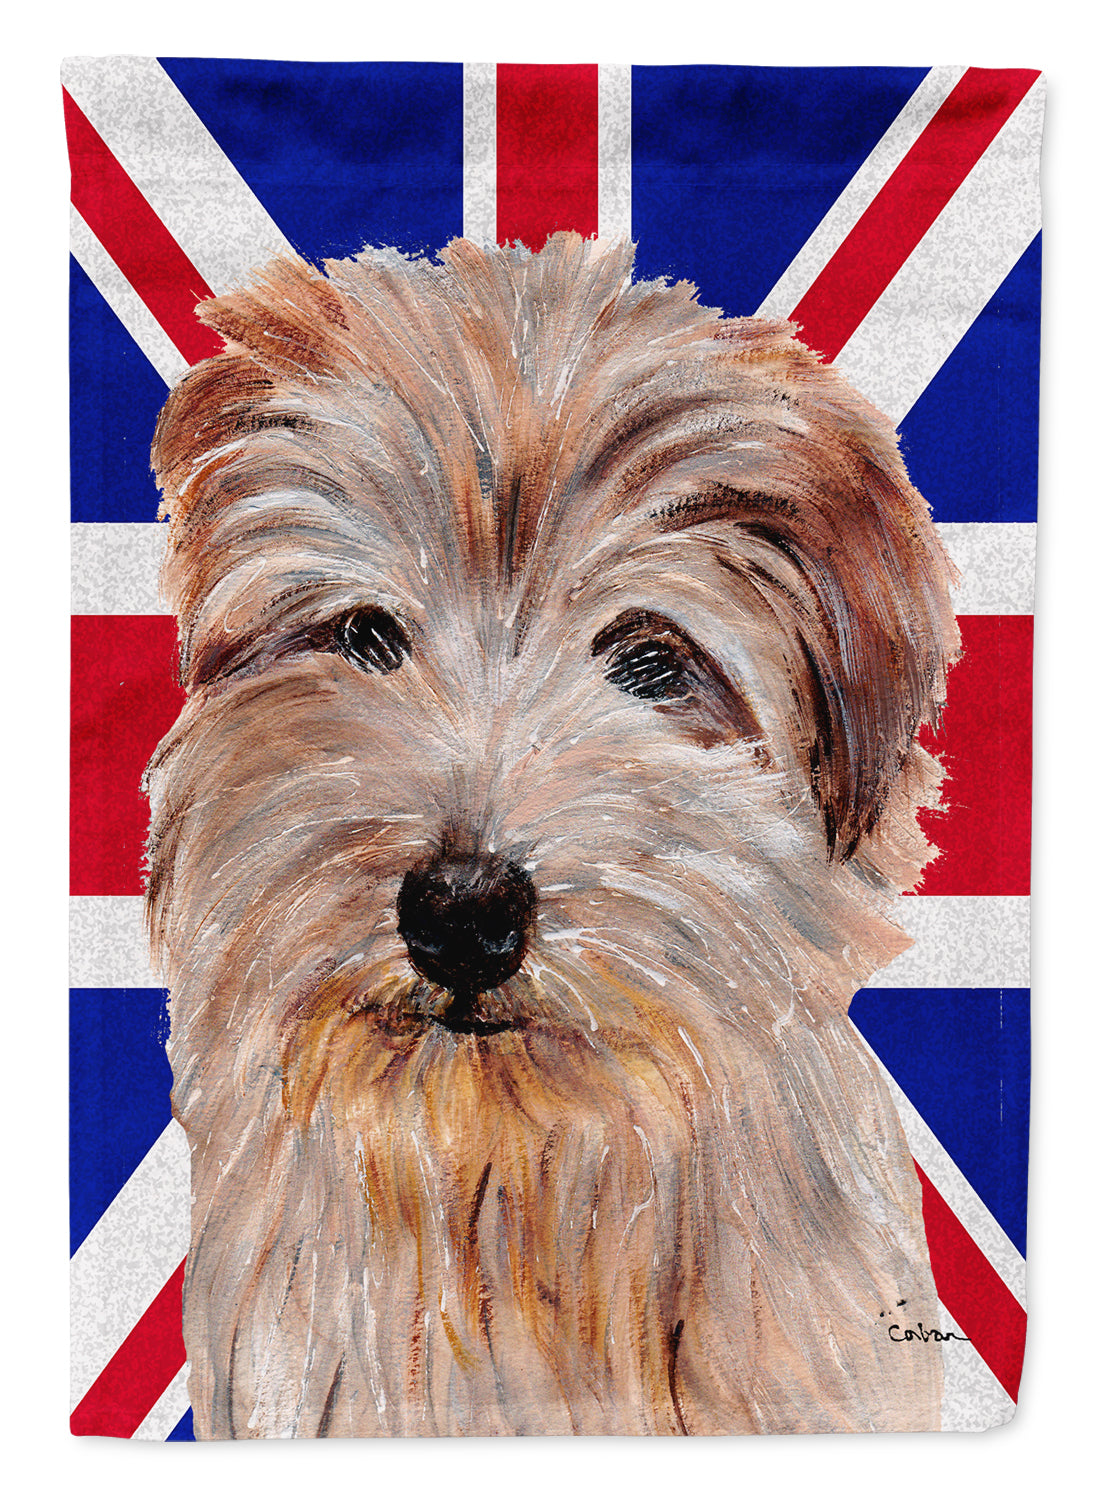 Norfolk Terrier with English Union Jack British Flag Flag Garden Size SC9875GF